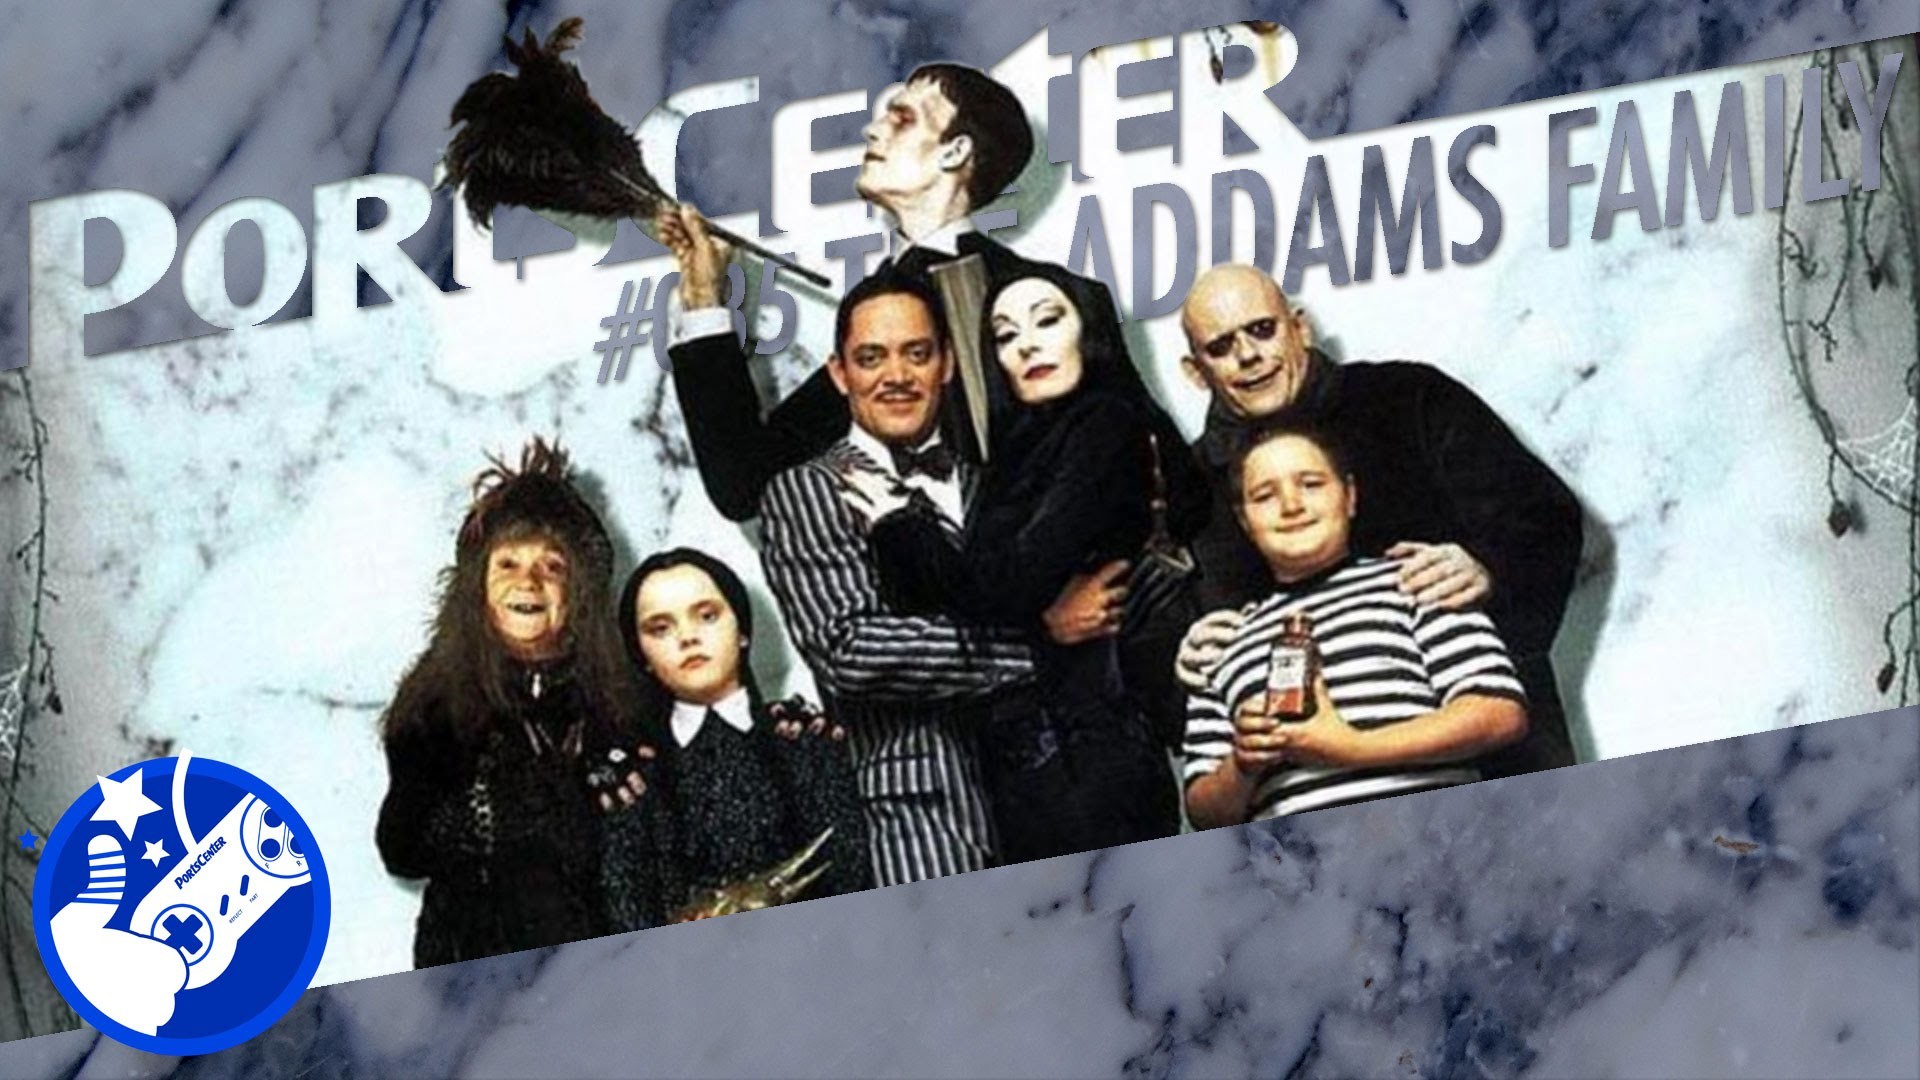 1920x1080 "The Addams Family" - Super Nintendo, Genesis, Amiga, Atari ST -  PortsCenter #035 - YouTube